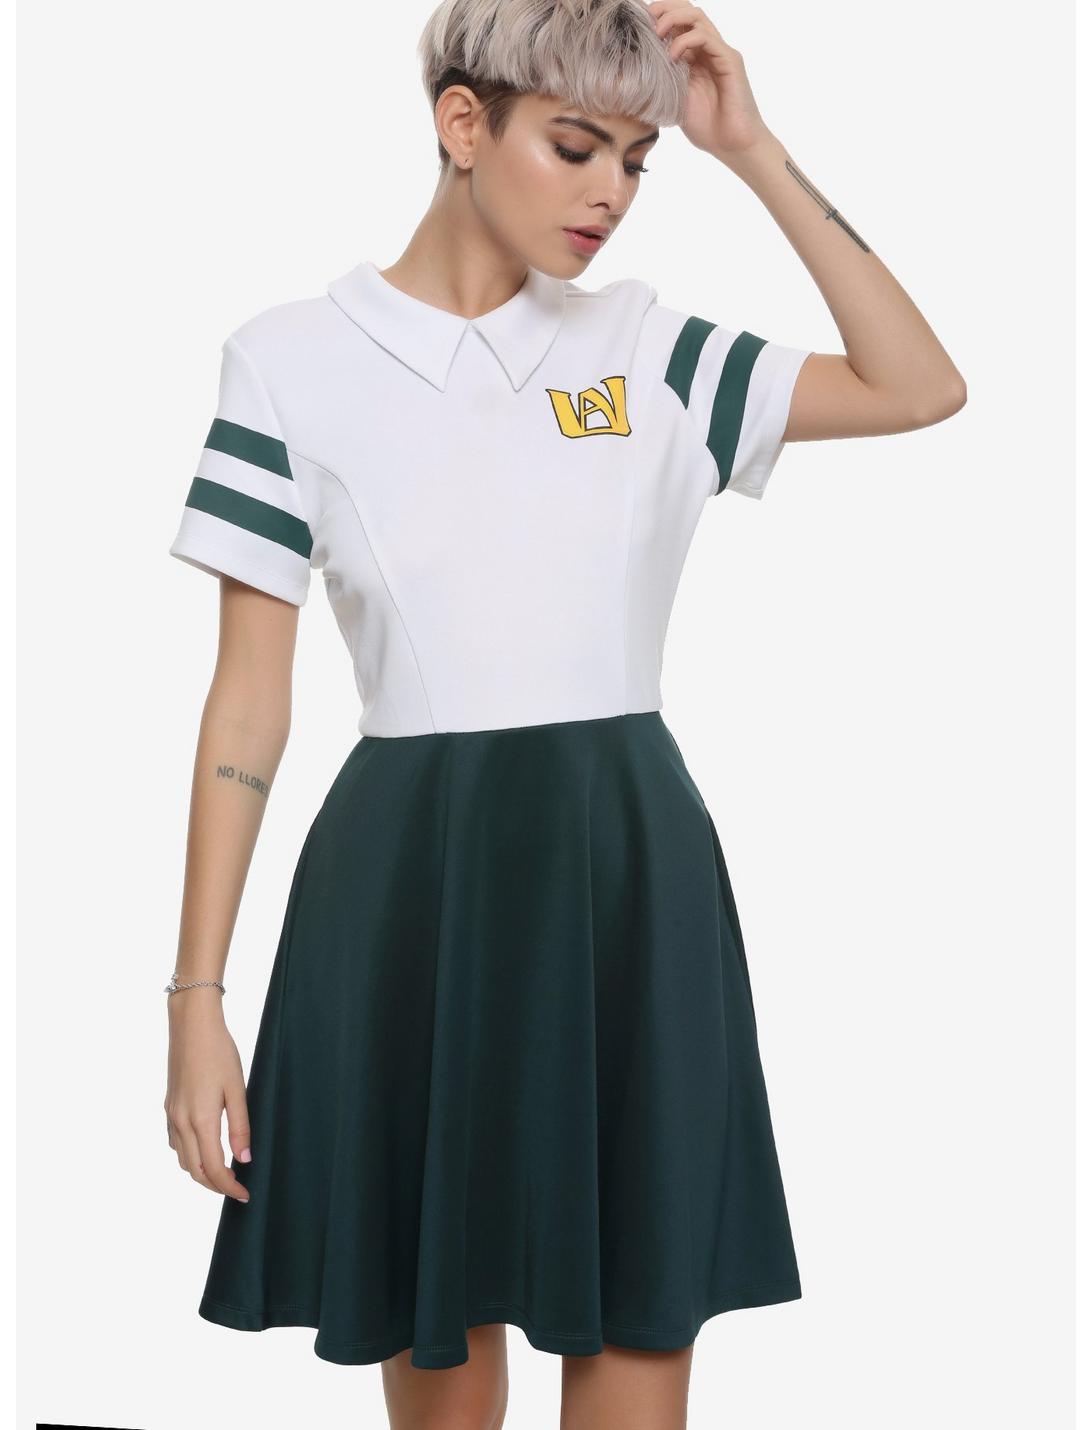 My Hero Academia Uniform Dress Costume, MULTI, hi-res